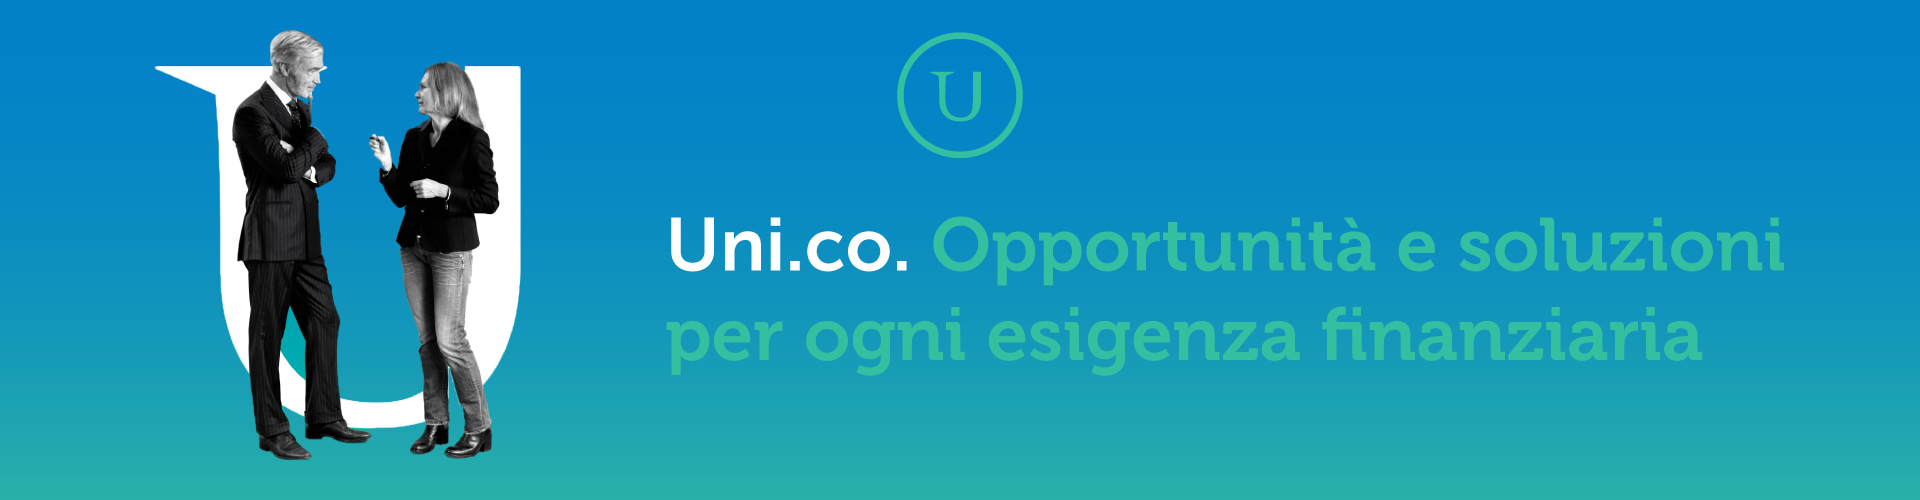 Unico-Banner